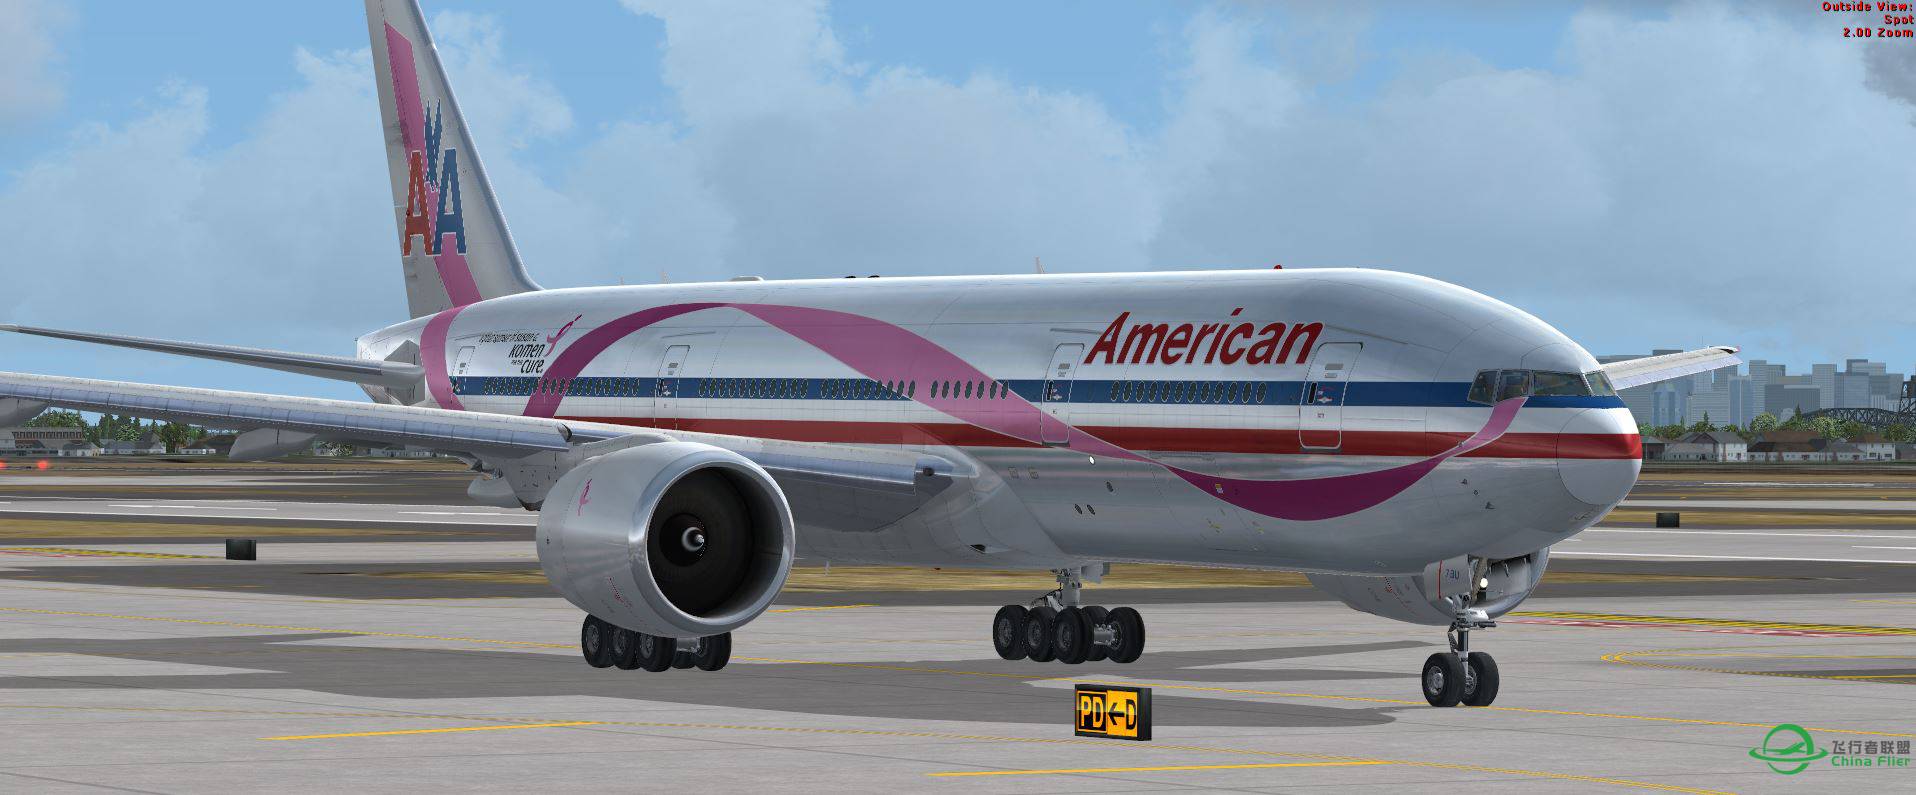 B777 American Airline-4630 